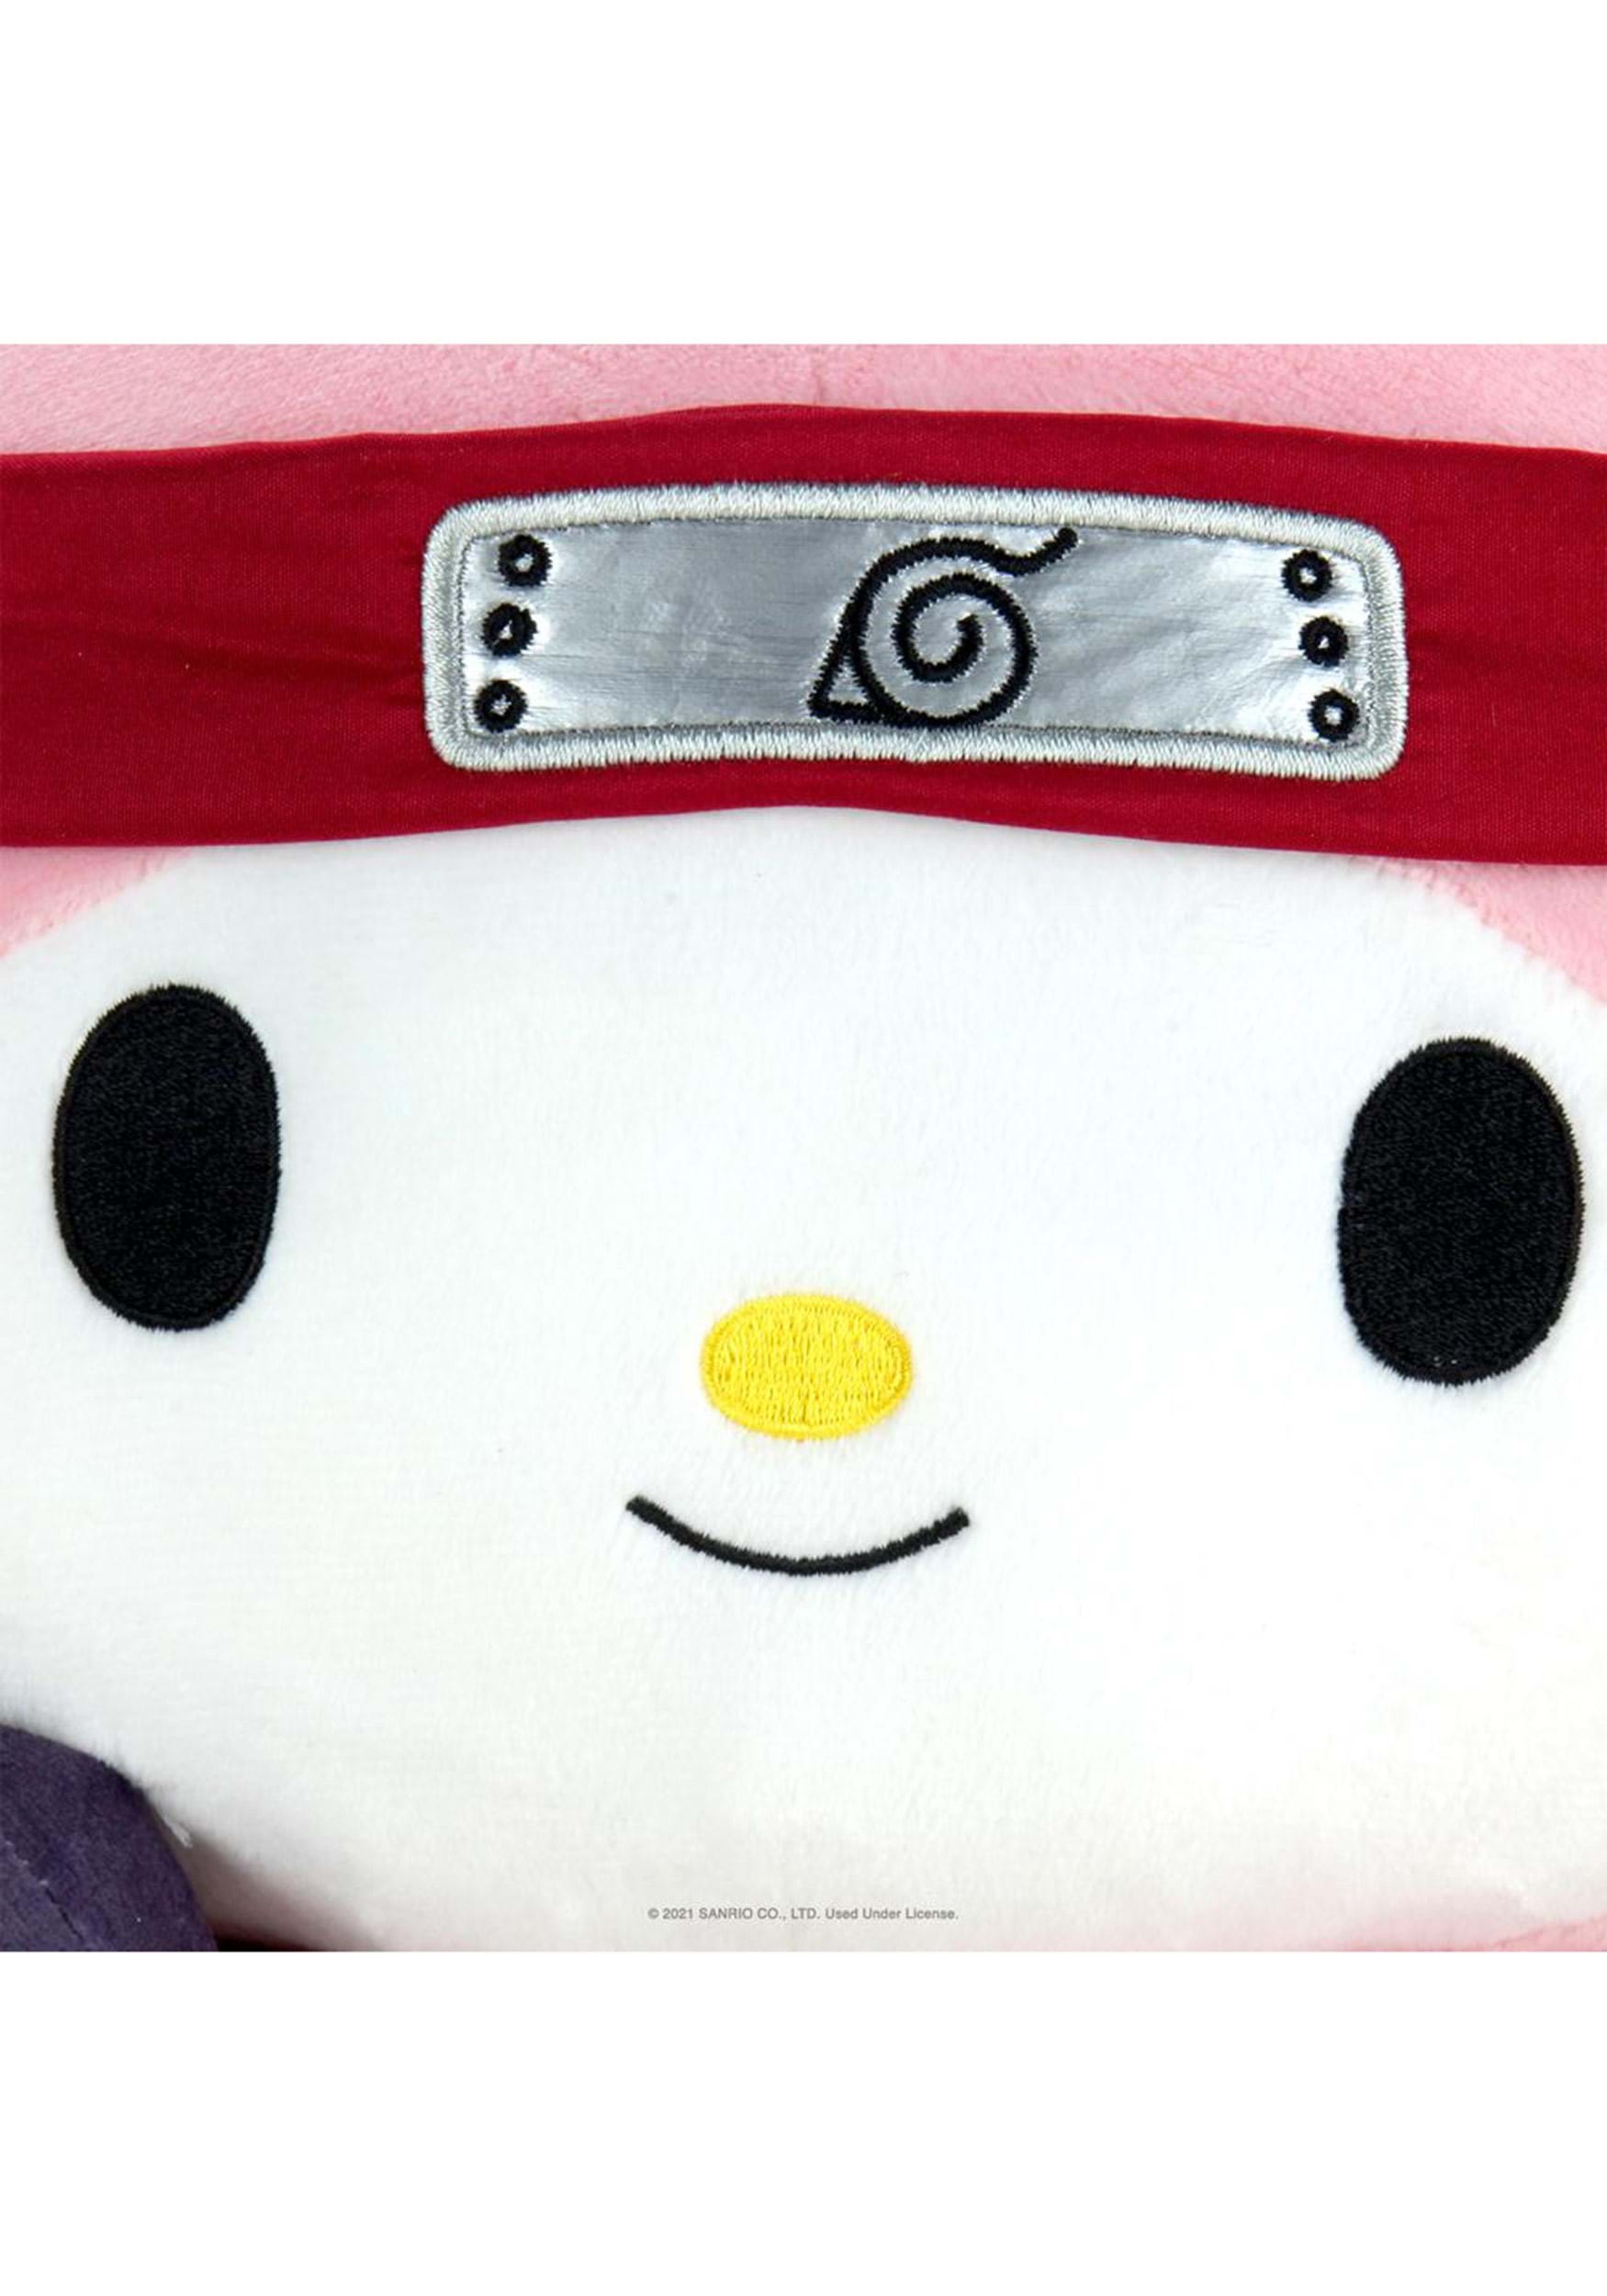 Naruto x Hello Kitty 13 Plush - Sakura